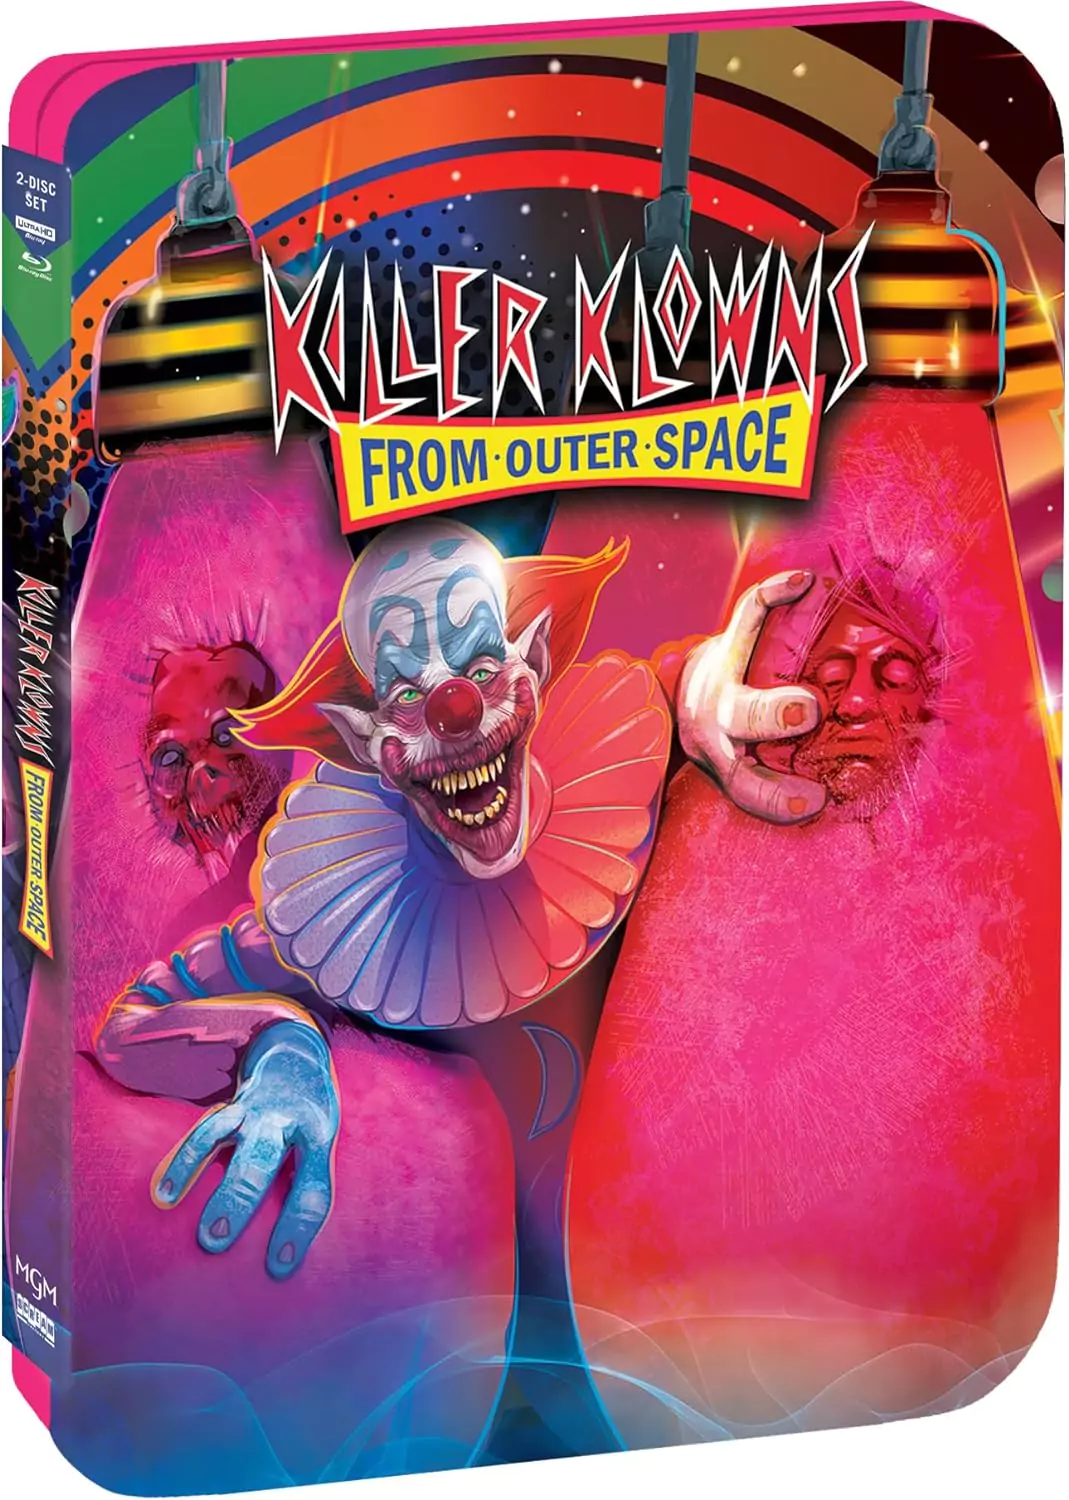 Killer Klowns From Outer Space 4K Steelbook Scream Factory